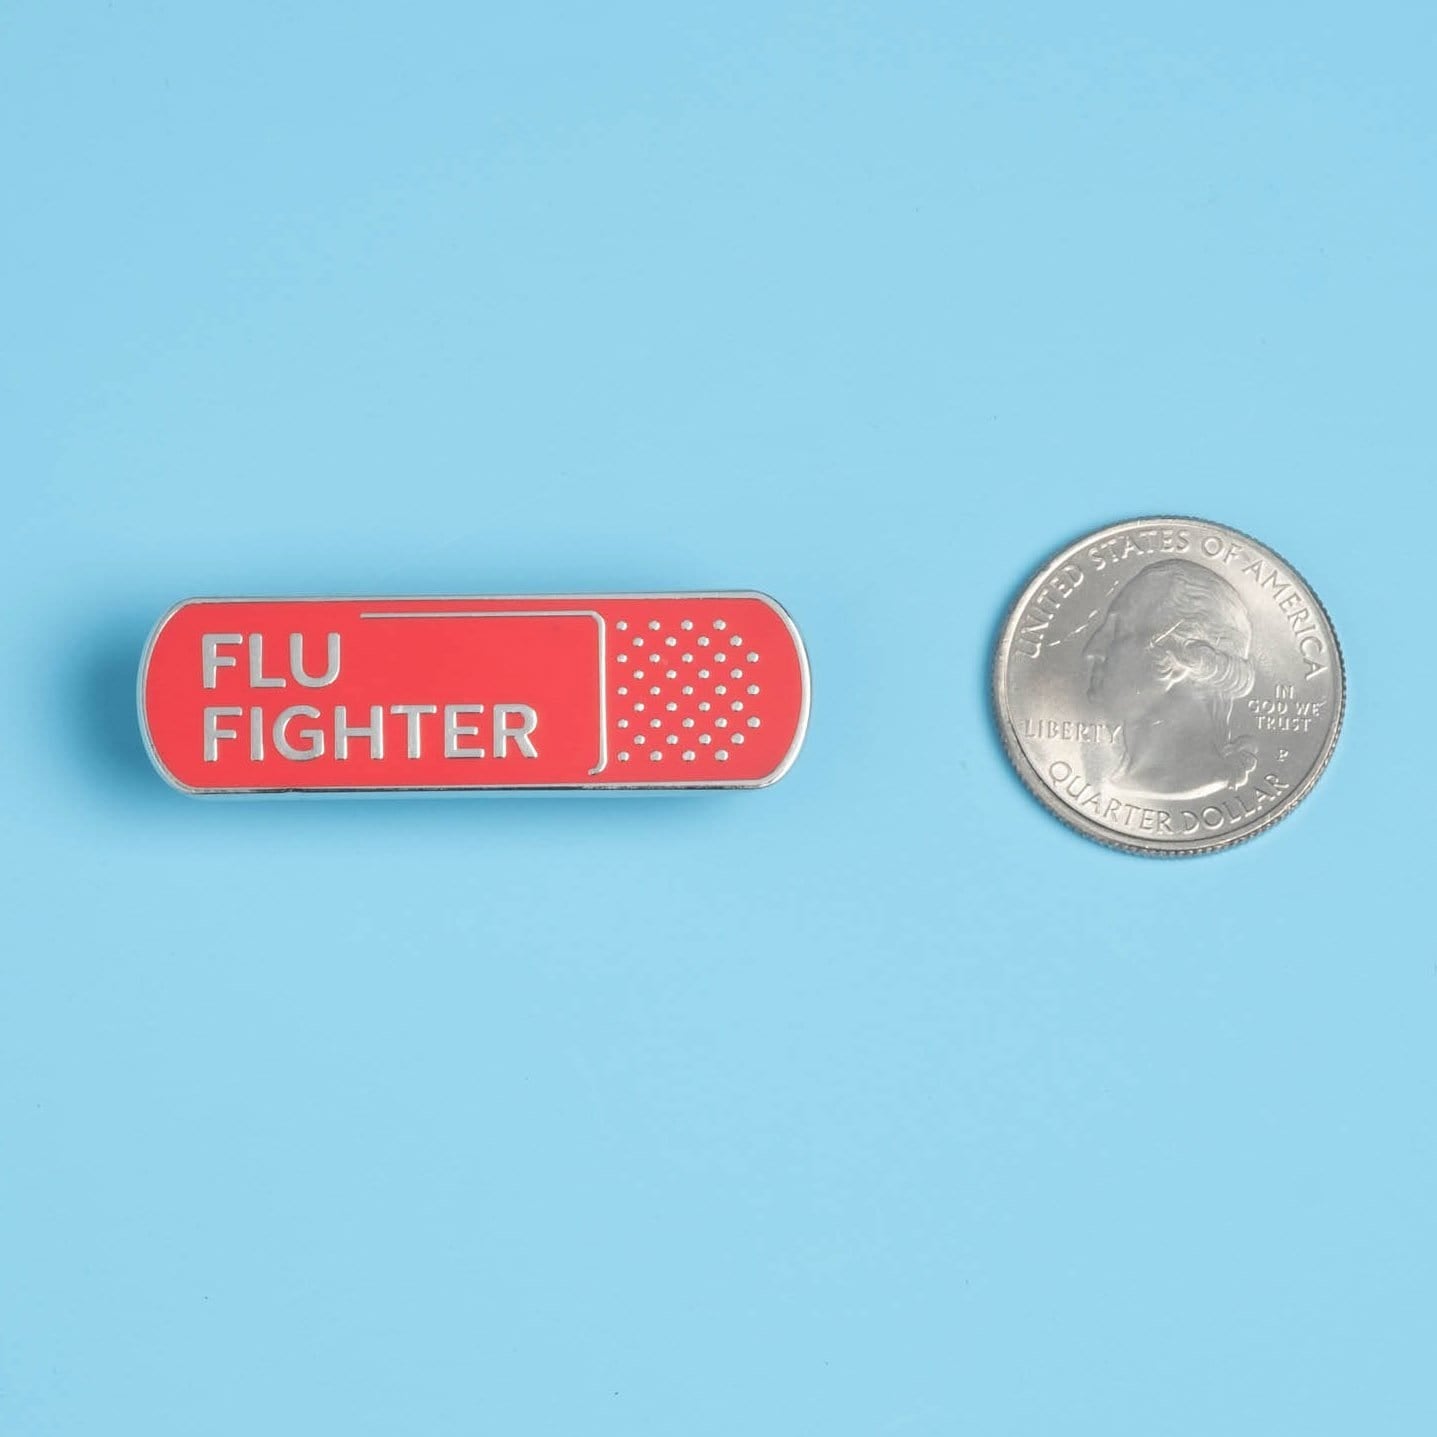 Flu Fighter Pin